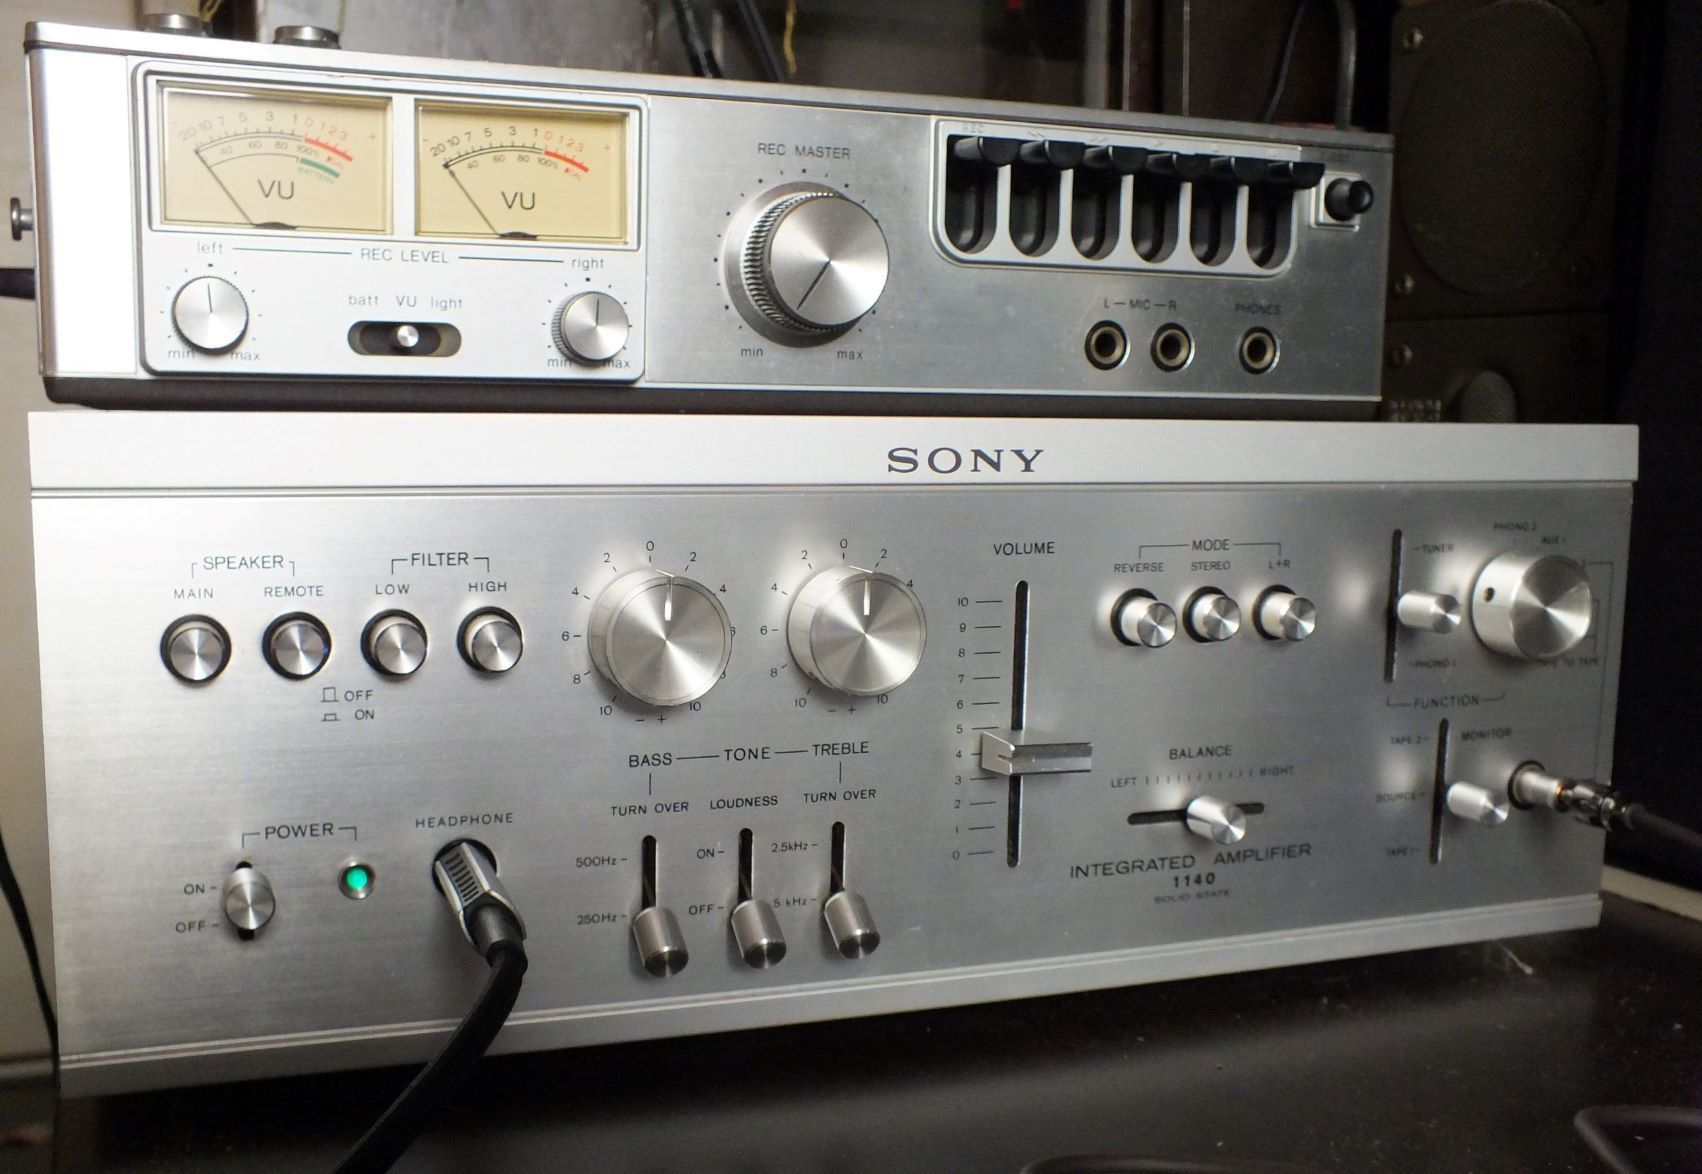 SONY TA-1140 integrated amplifier | 日刊もしくは週間ポジティブニュース